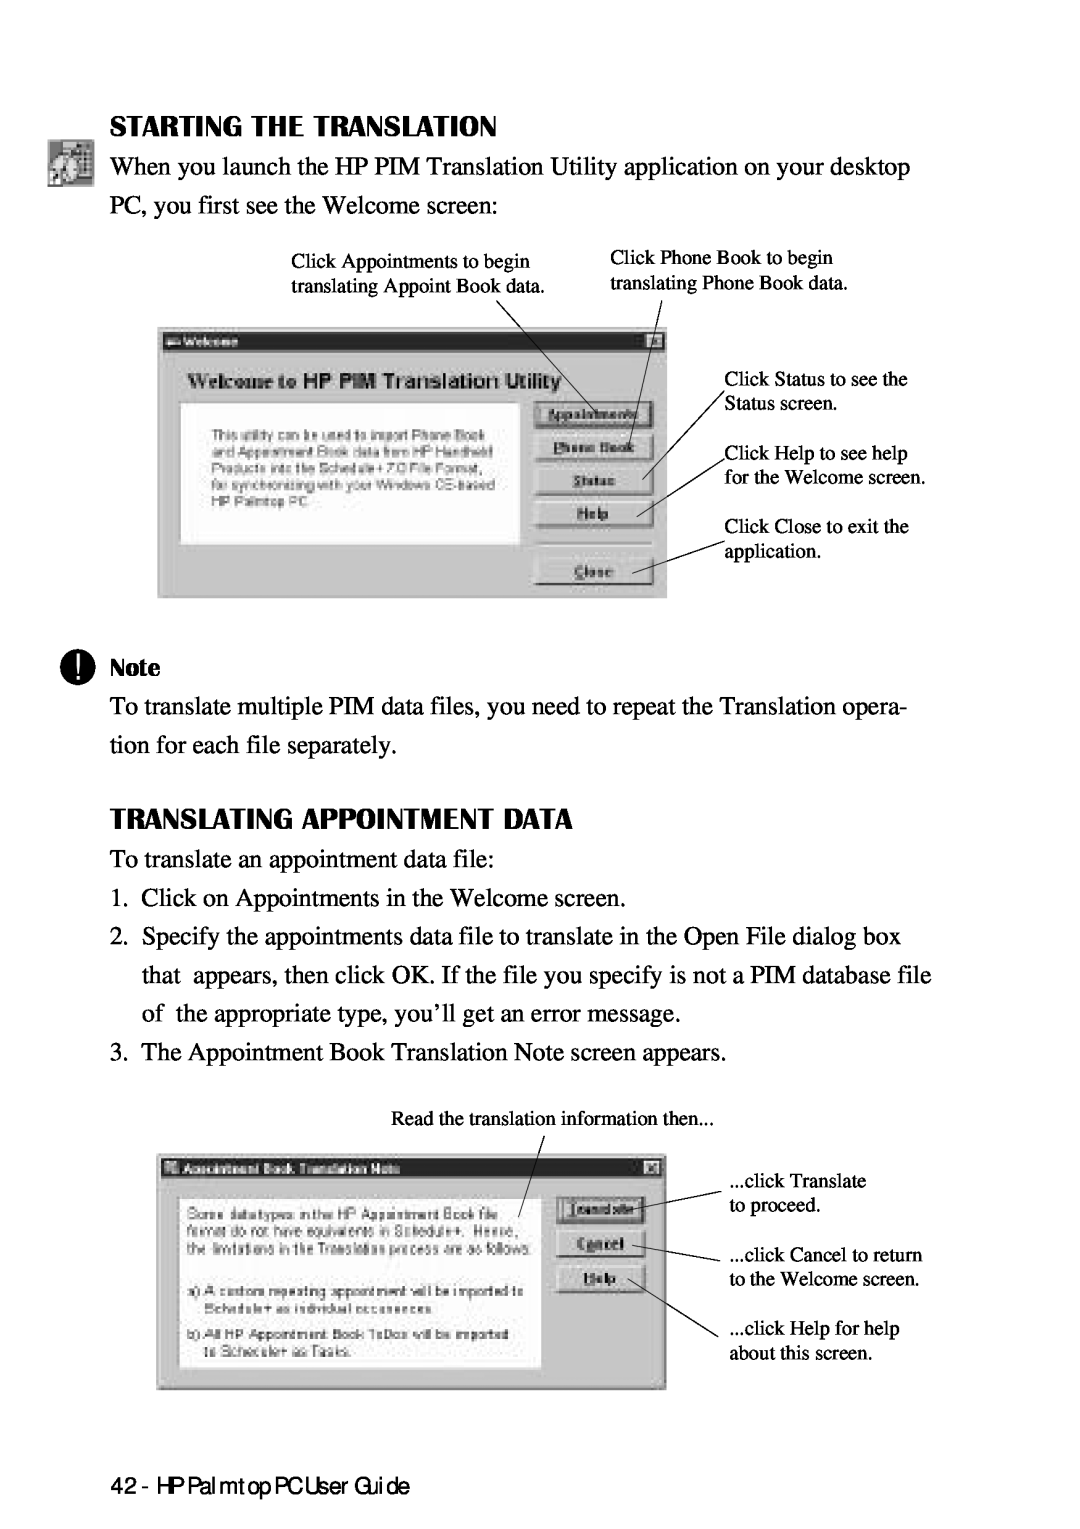 HP Palmtop 660LX, Palmtop 620X manual Starting The Translation, Translating Appointment Data 